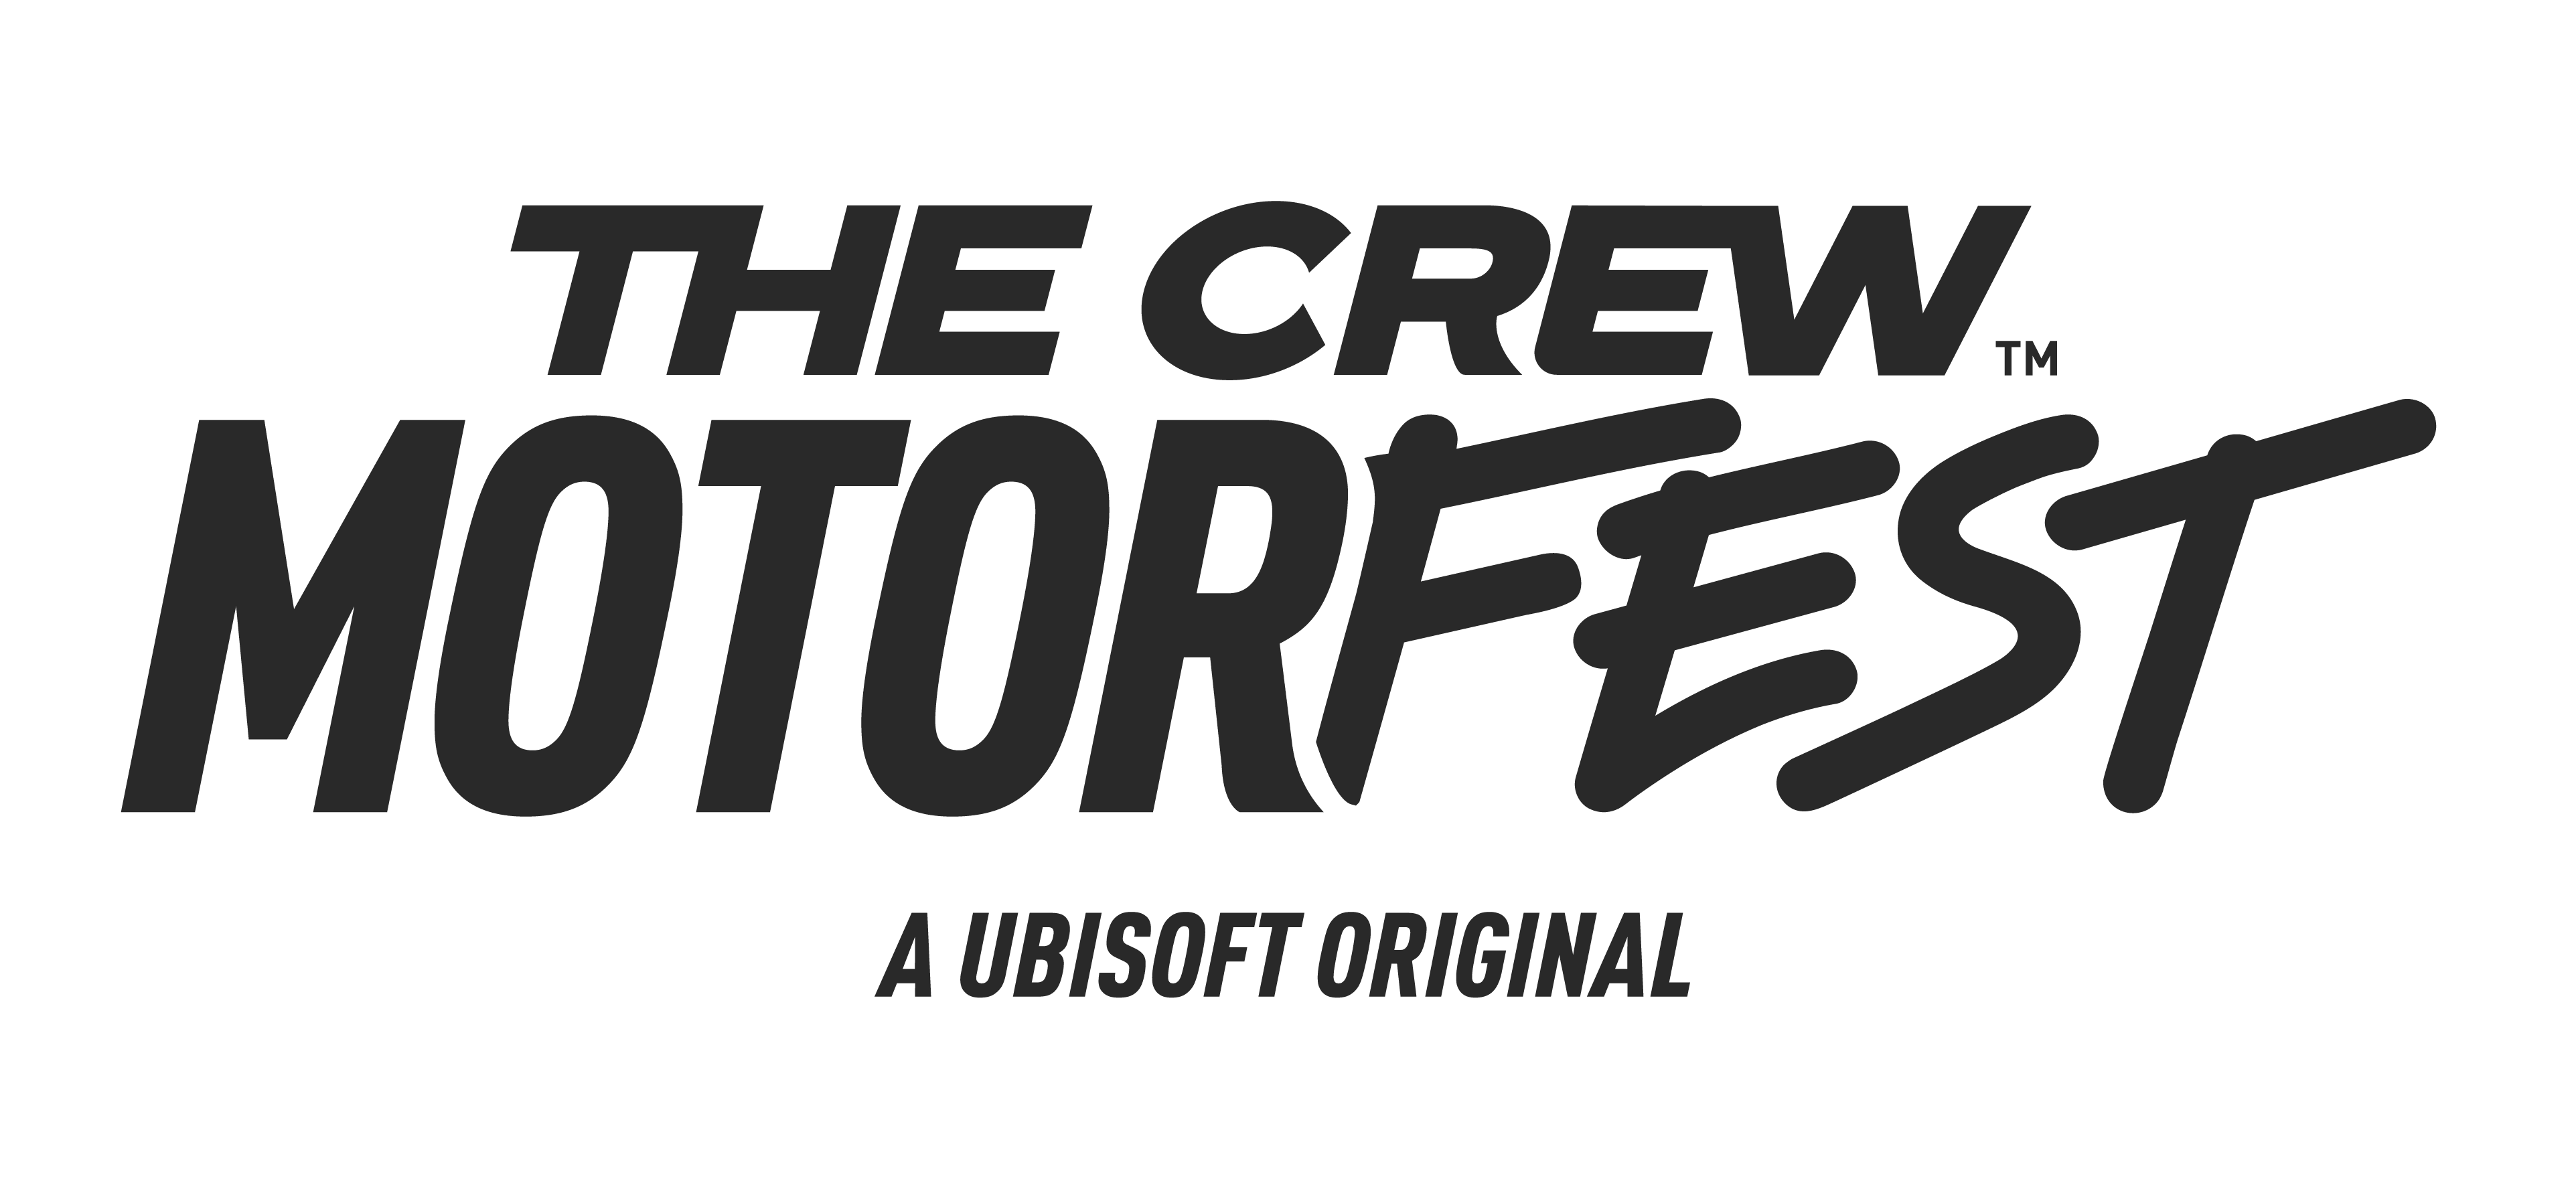 The Crew: Motorfest - PlayStation 4